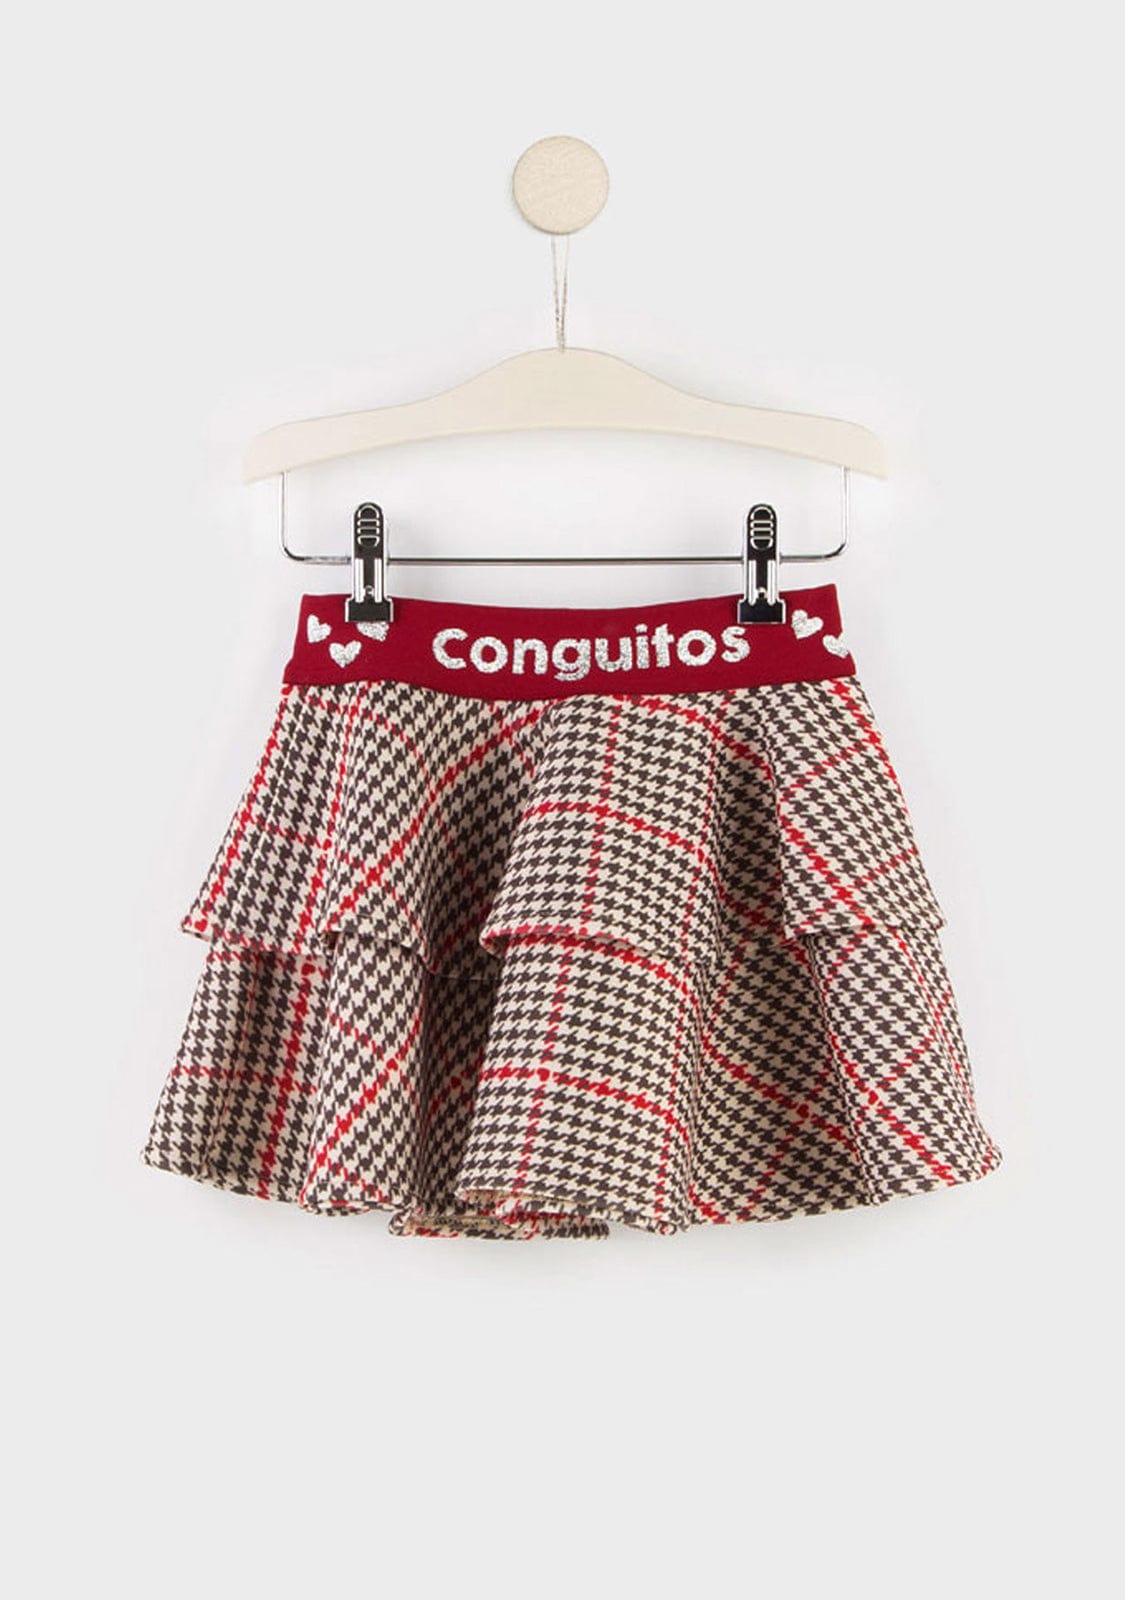 CONGUITOS TEXTIL Clothing Girl's Houndstooth Neoprene Skirt